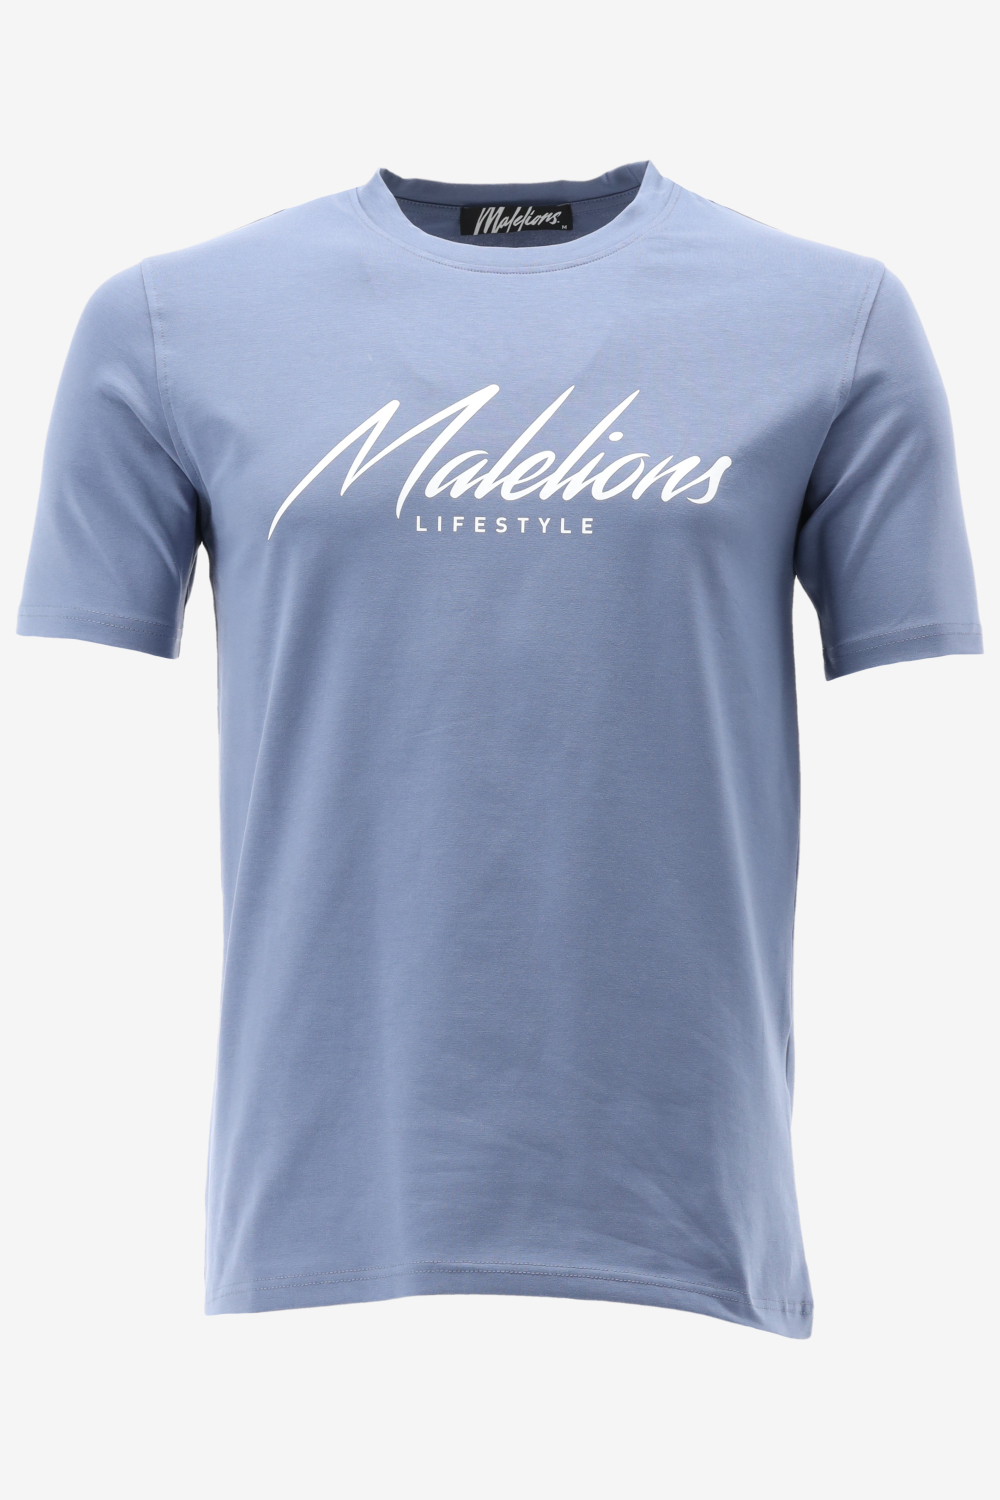 Malelions T-shirt 